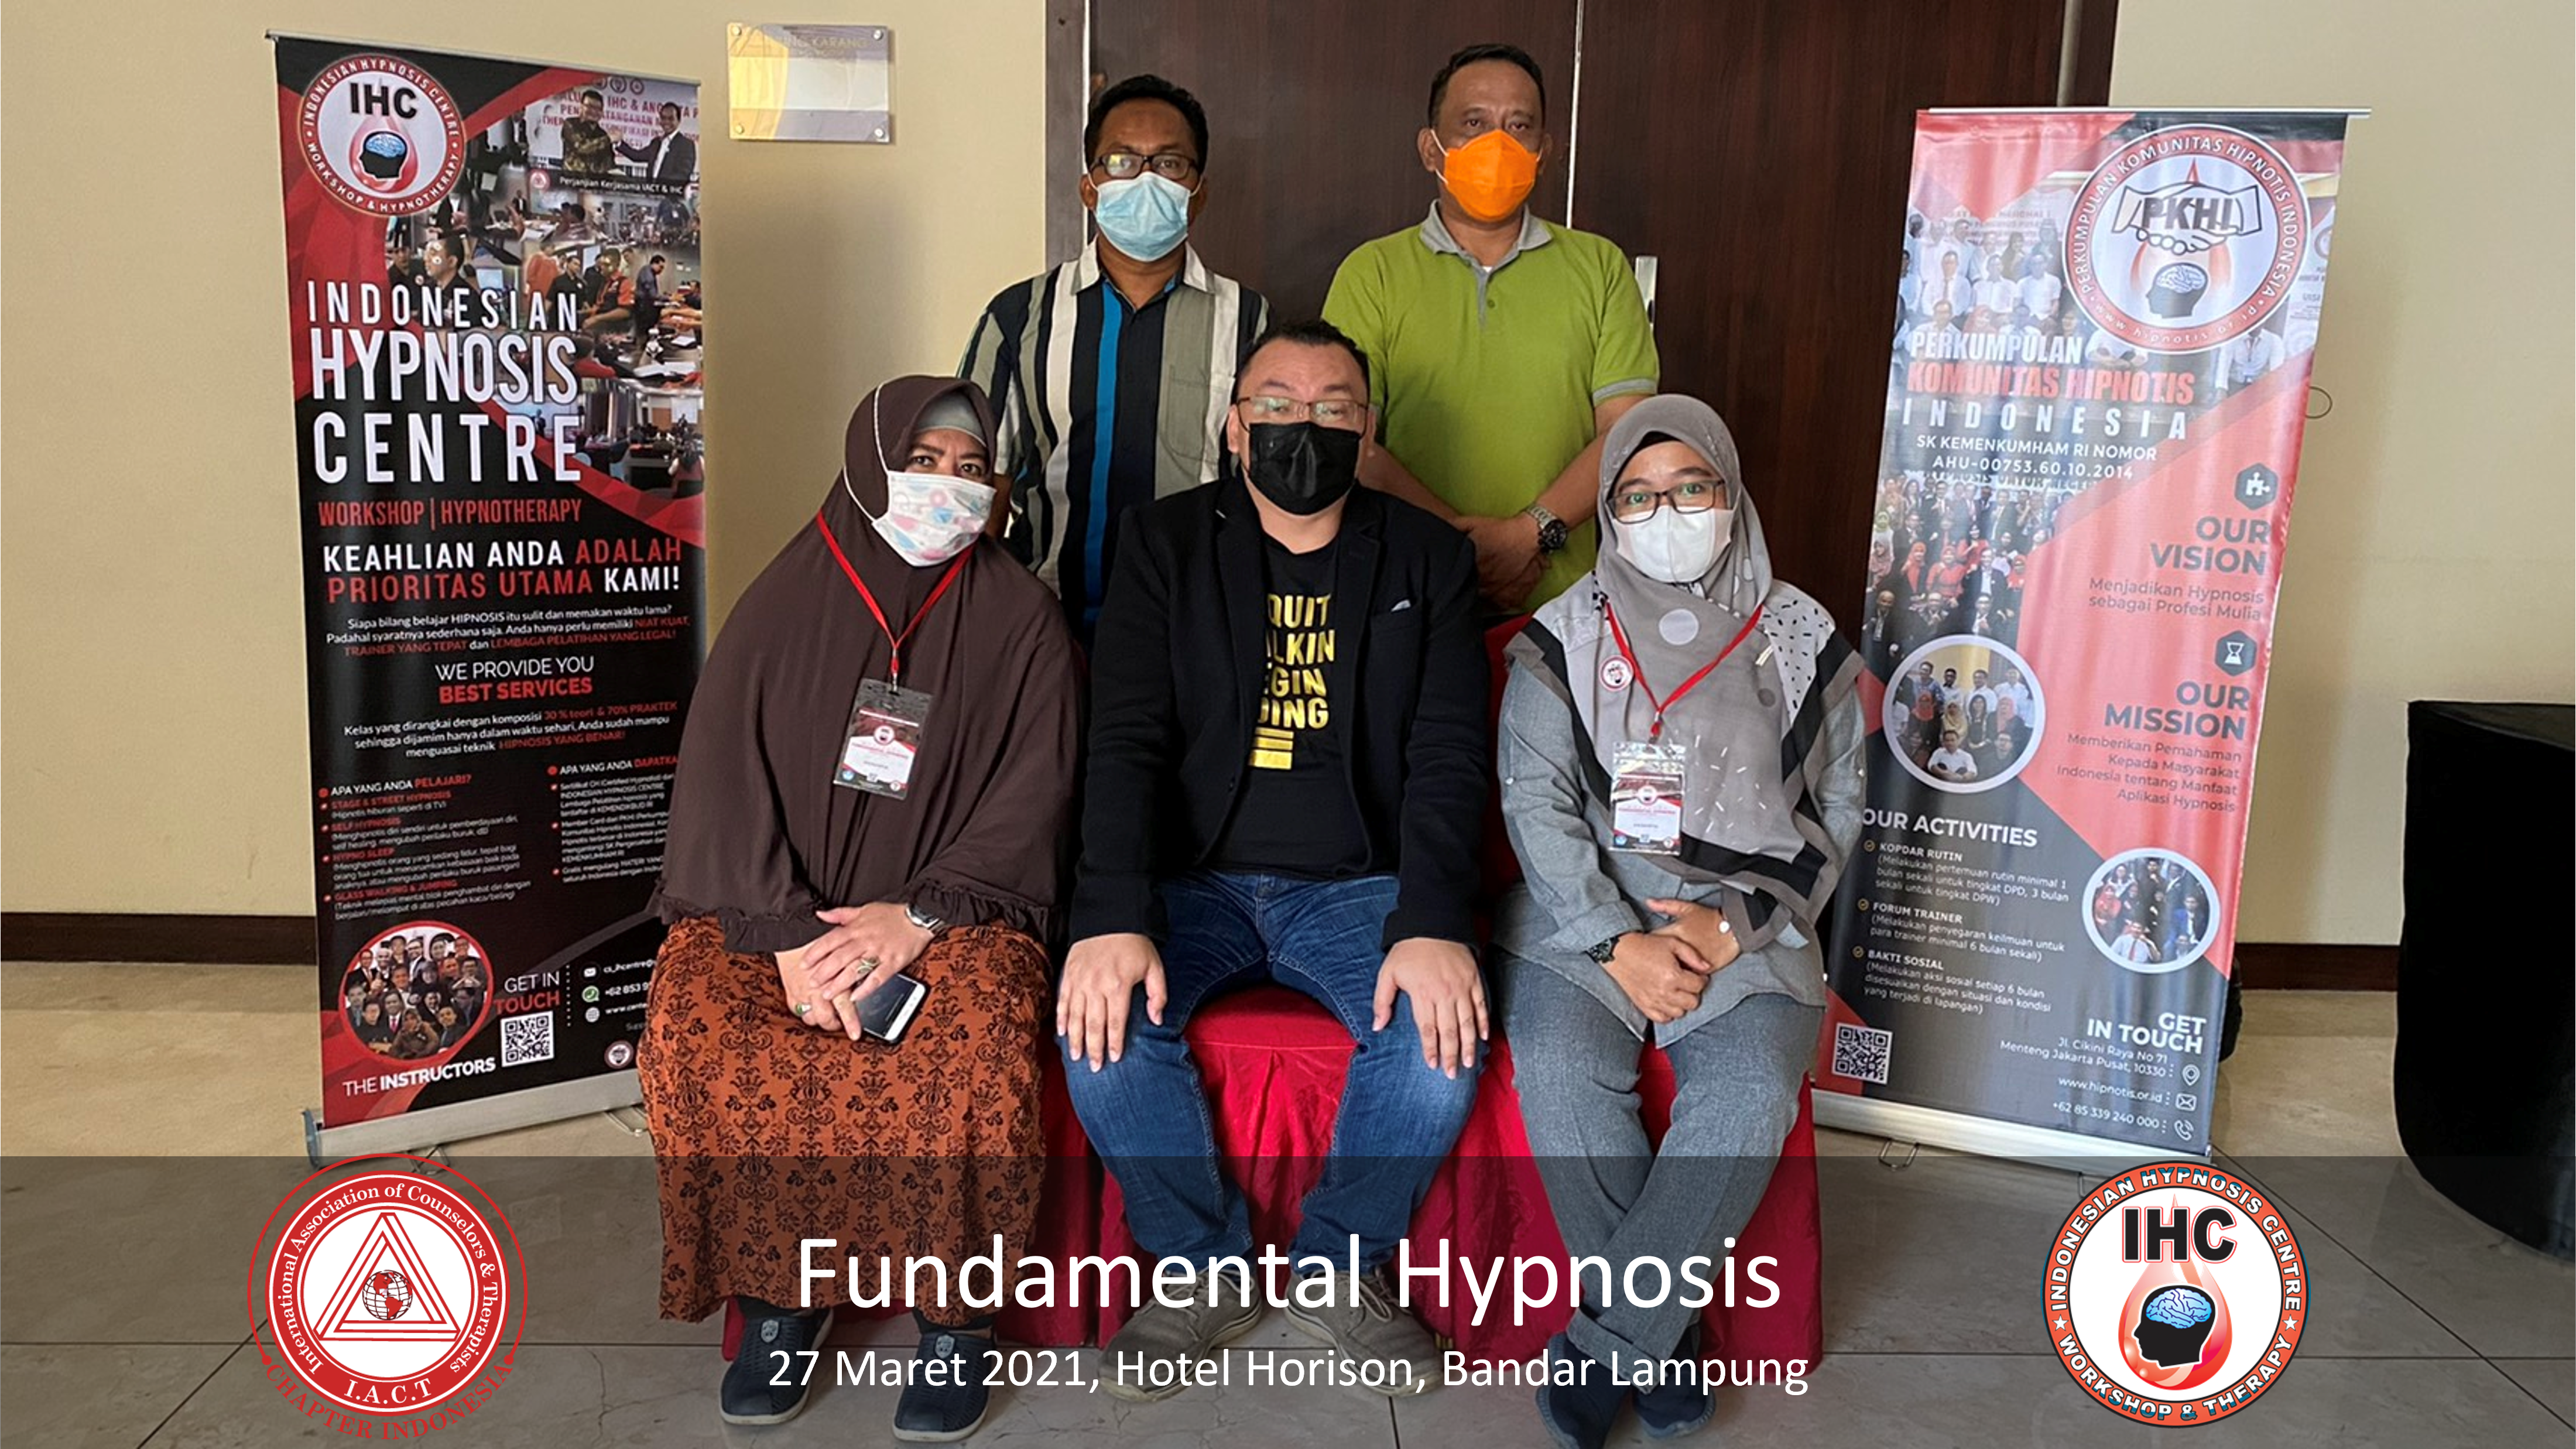 Andri Hakim 1 Fundamental Hypnosis - Lampung 27 Maret 2021